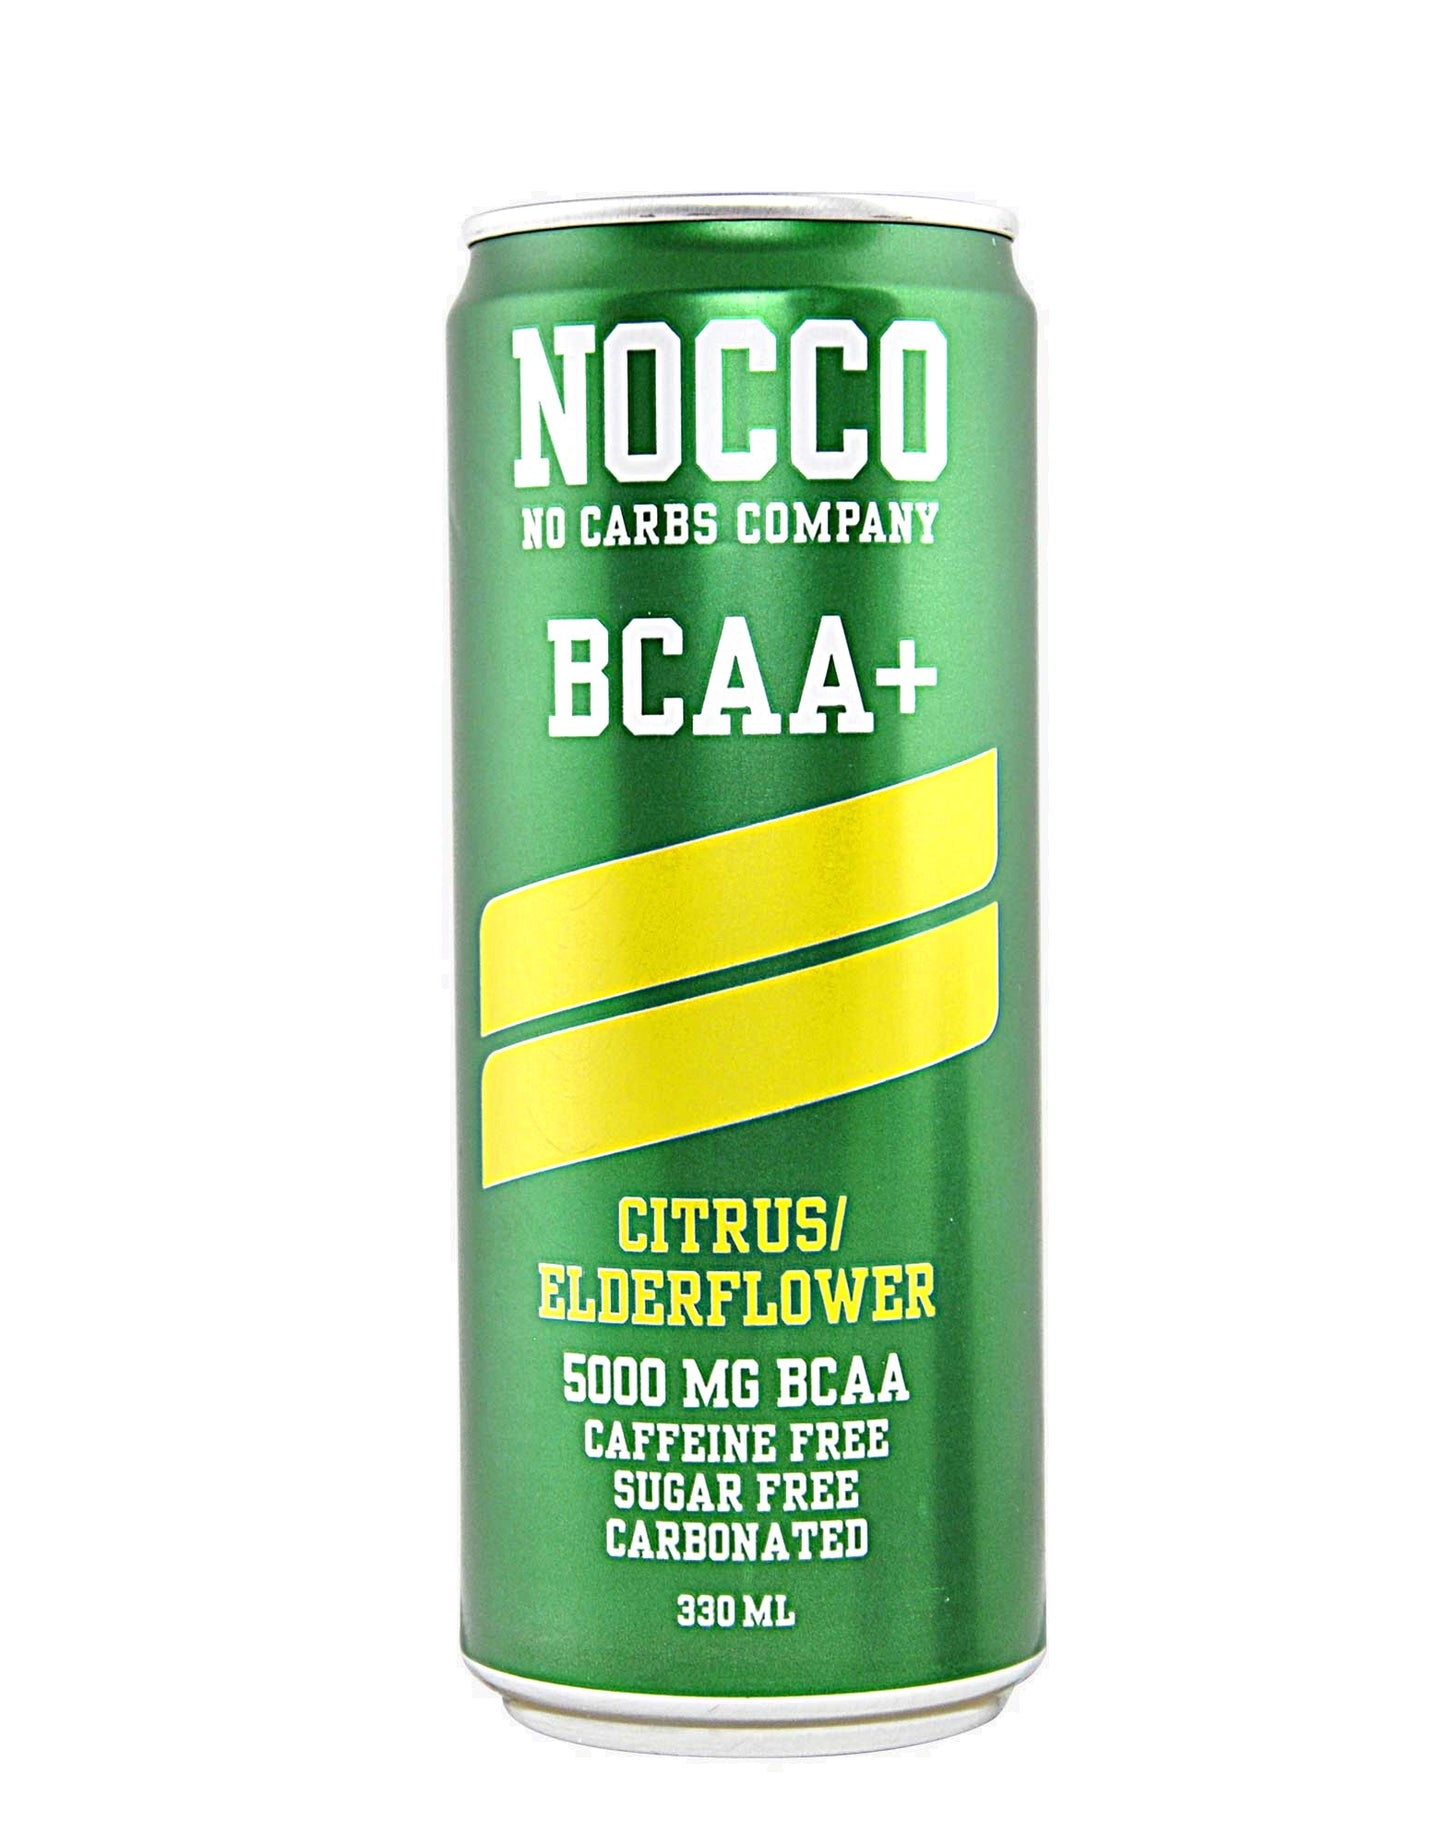 NOCCO BCAA (Caffeine Free) - 330ml